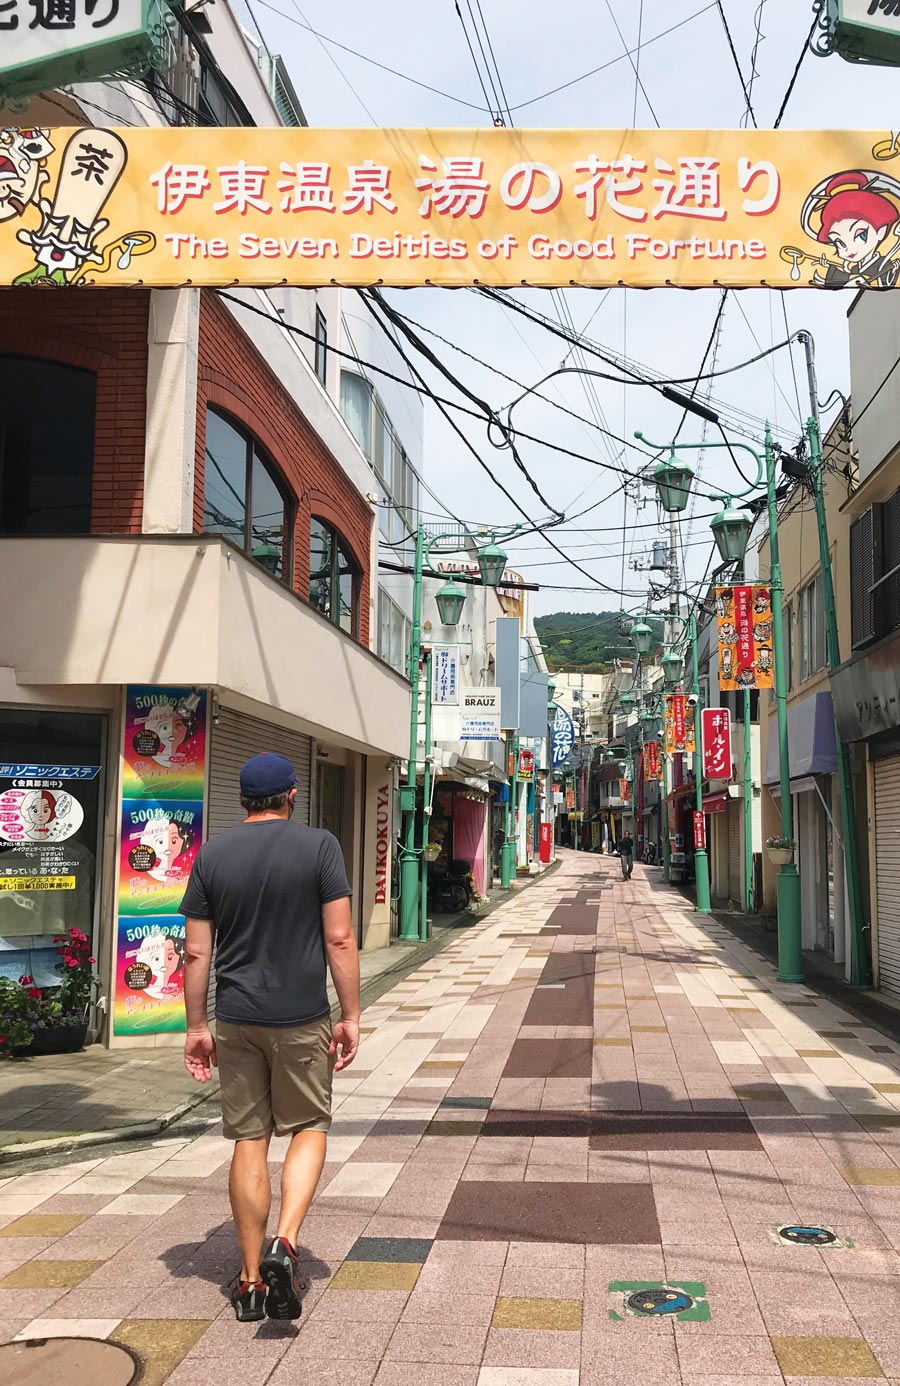 alleyway of shops in Ito, Japan